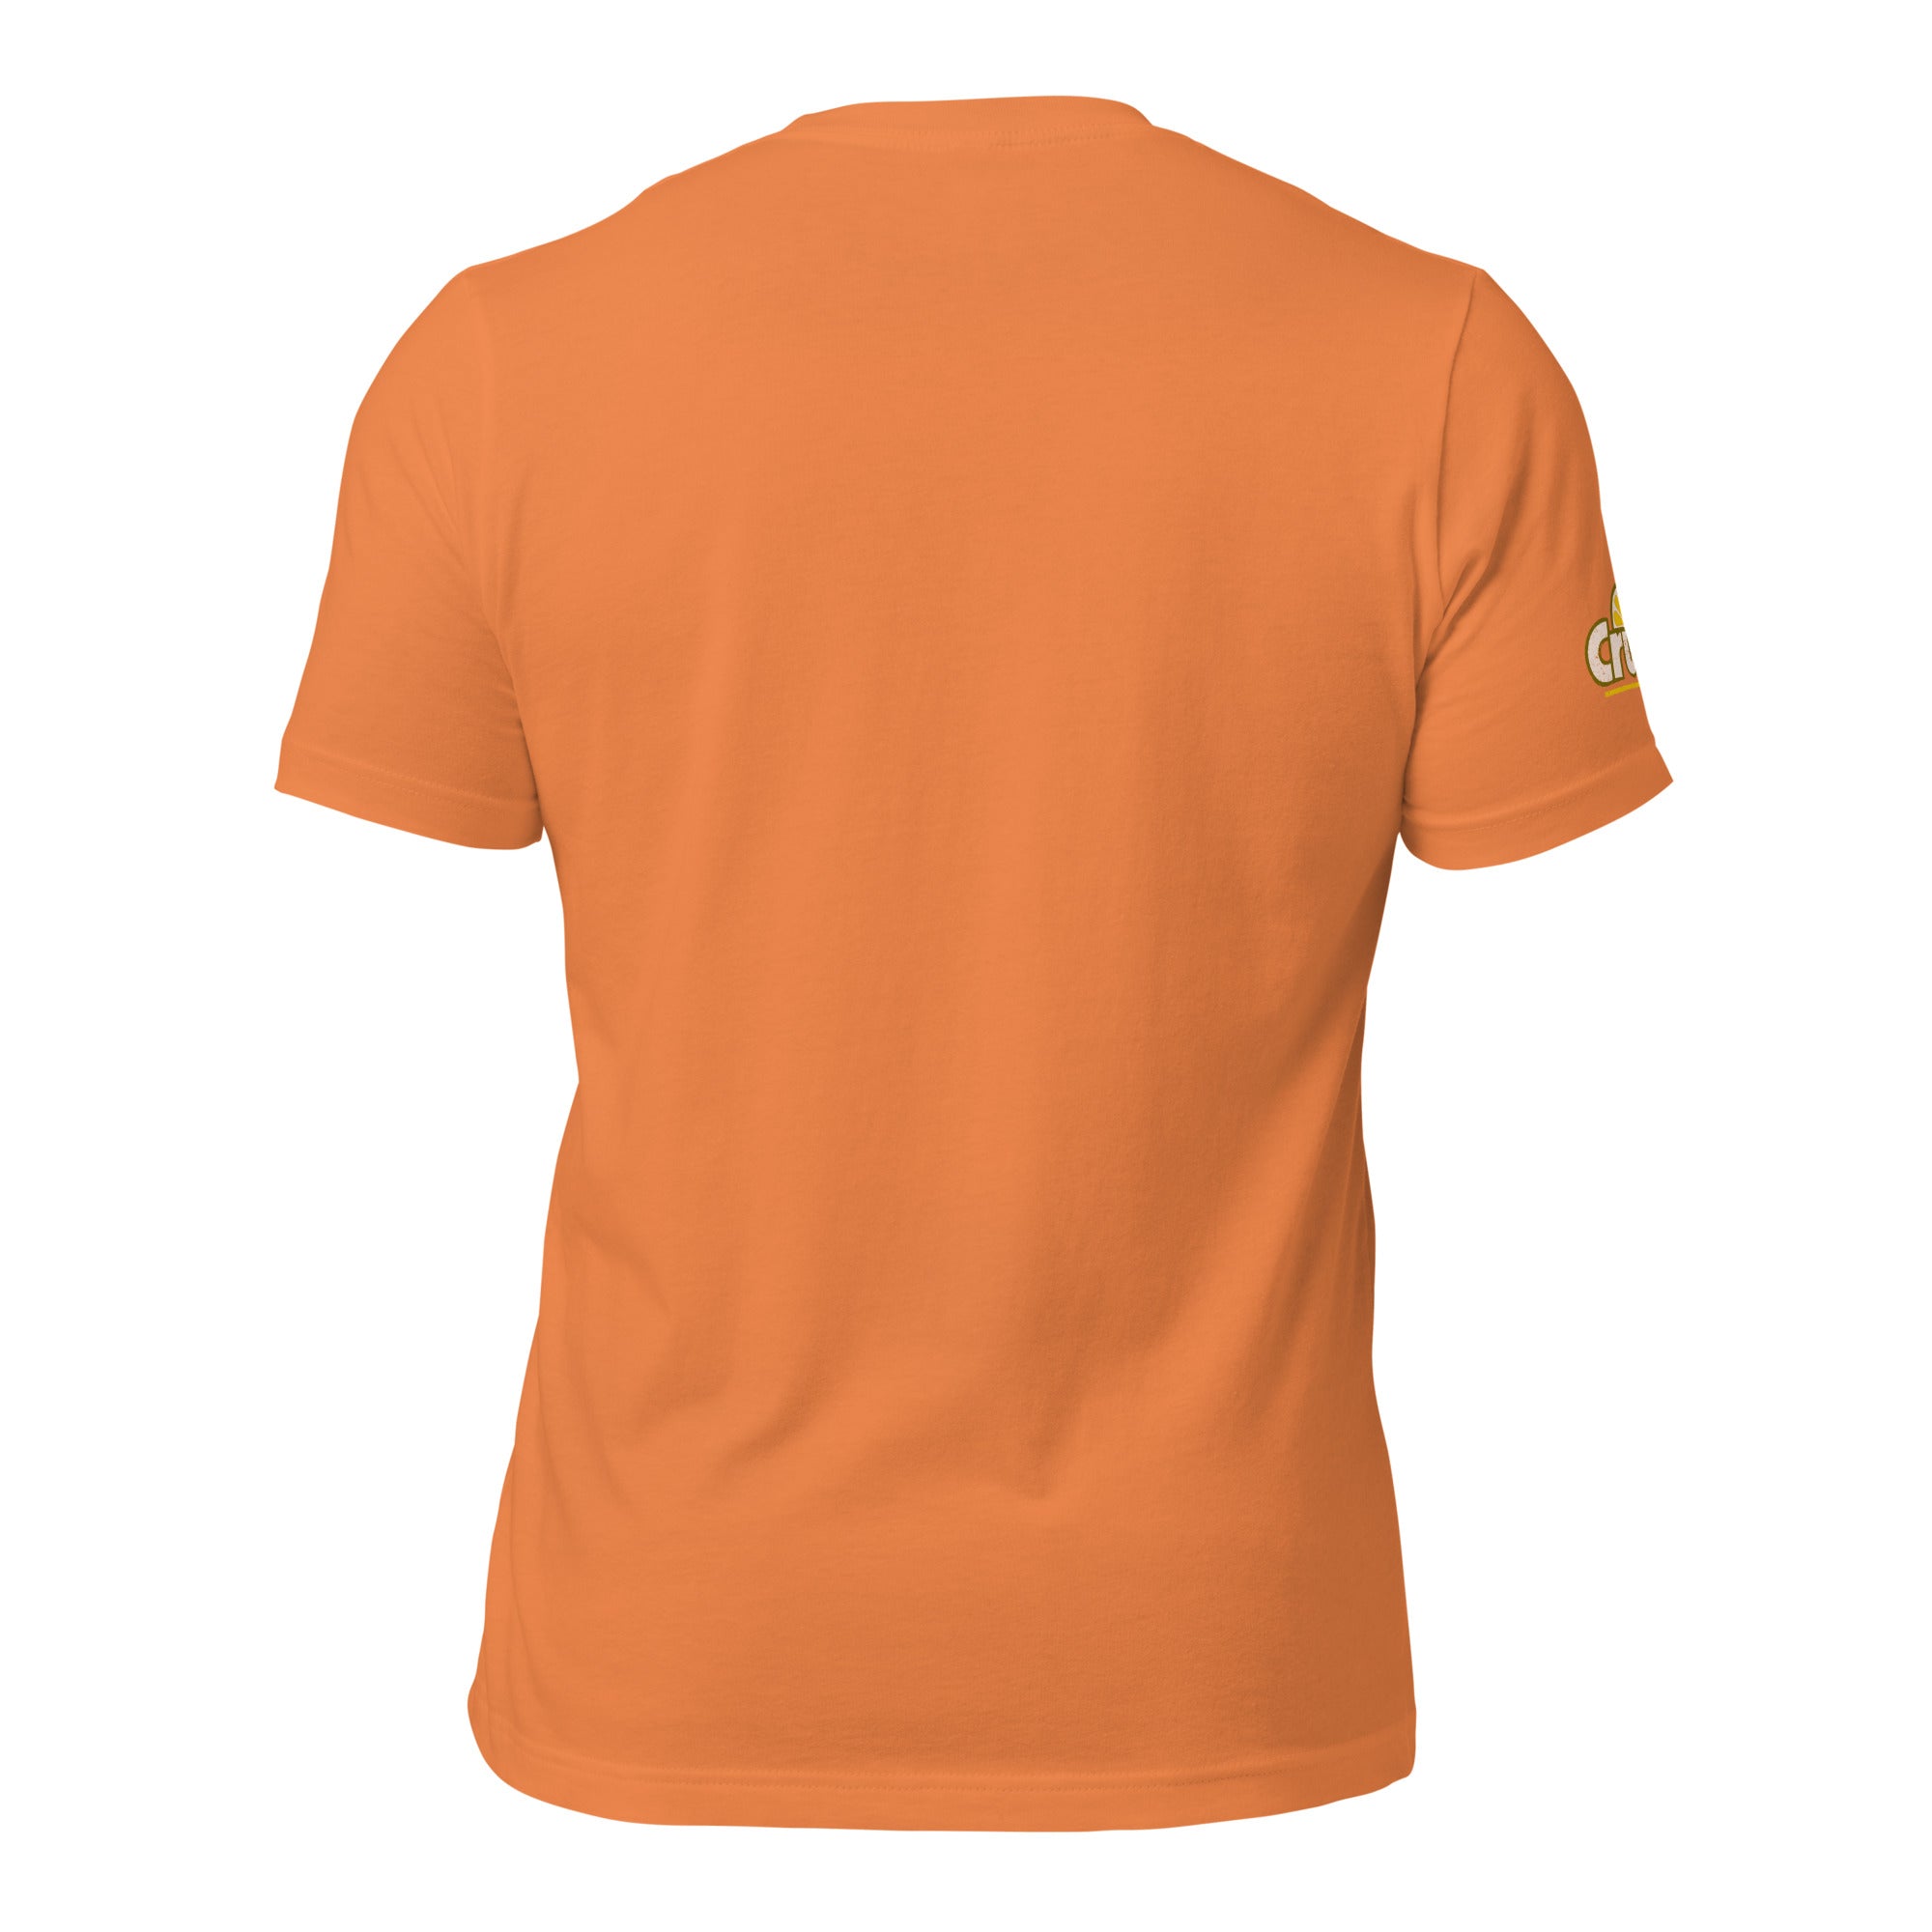 Unisex Crew Neck T-Shirt - Vintage Orange Crush - GRAPHIC T-SHIRTS